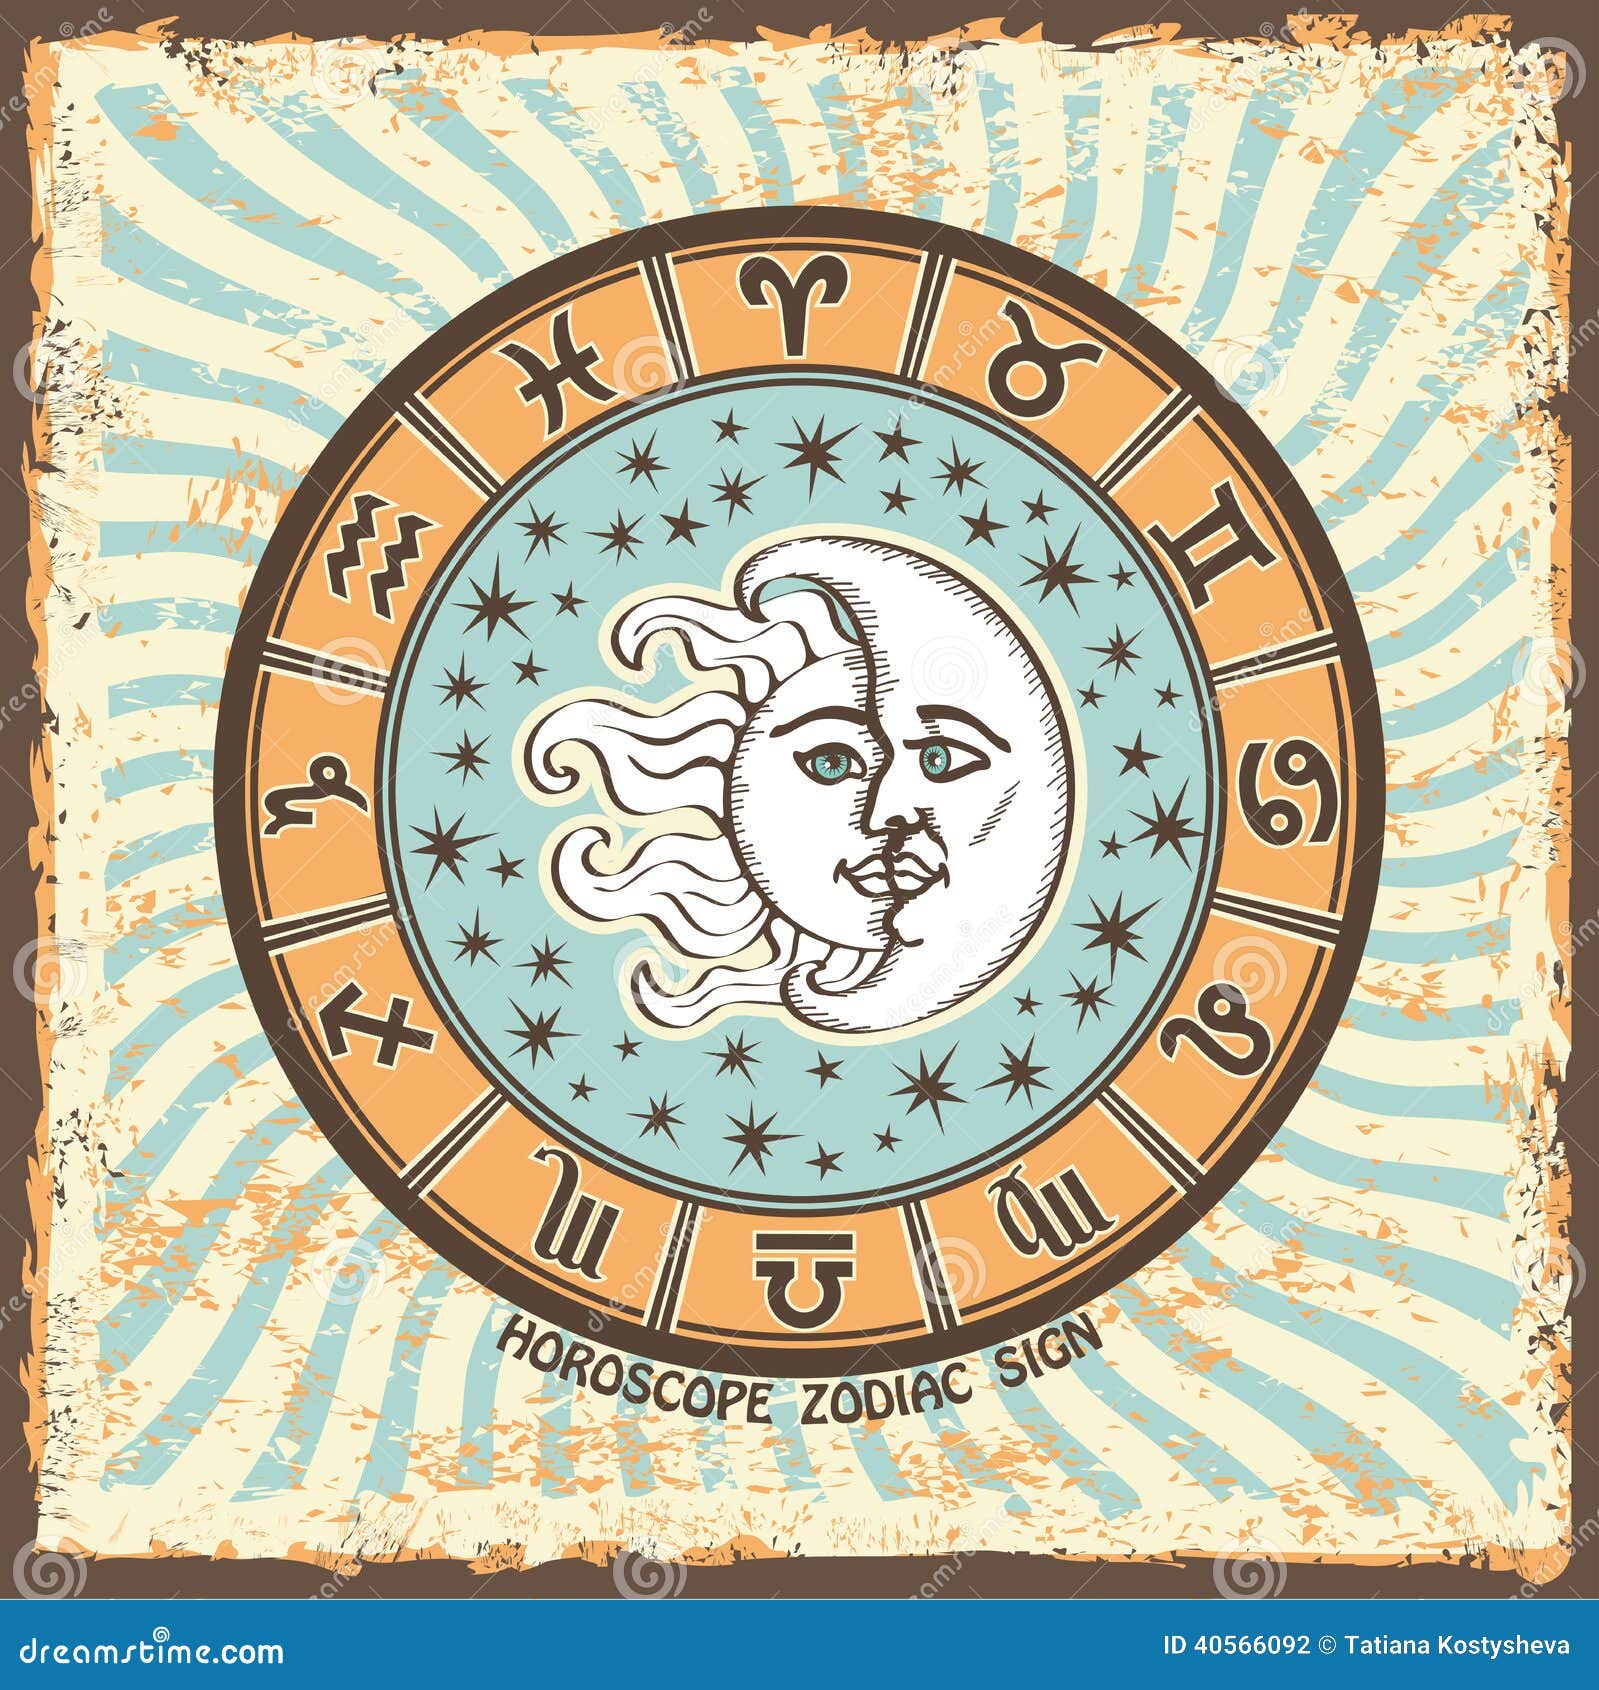 all zodiac sign in horoscope circle.vintage horoscope card